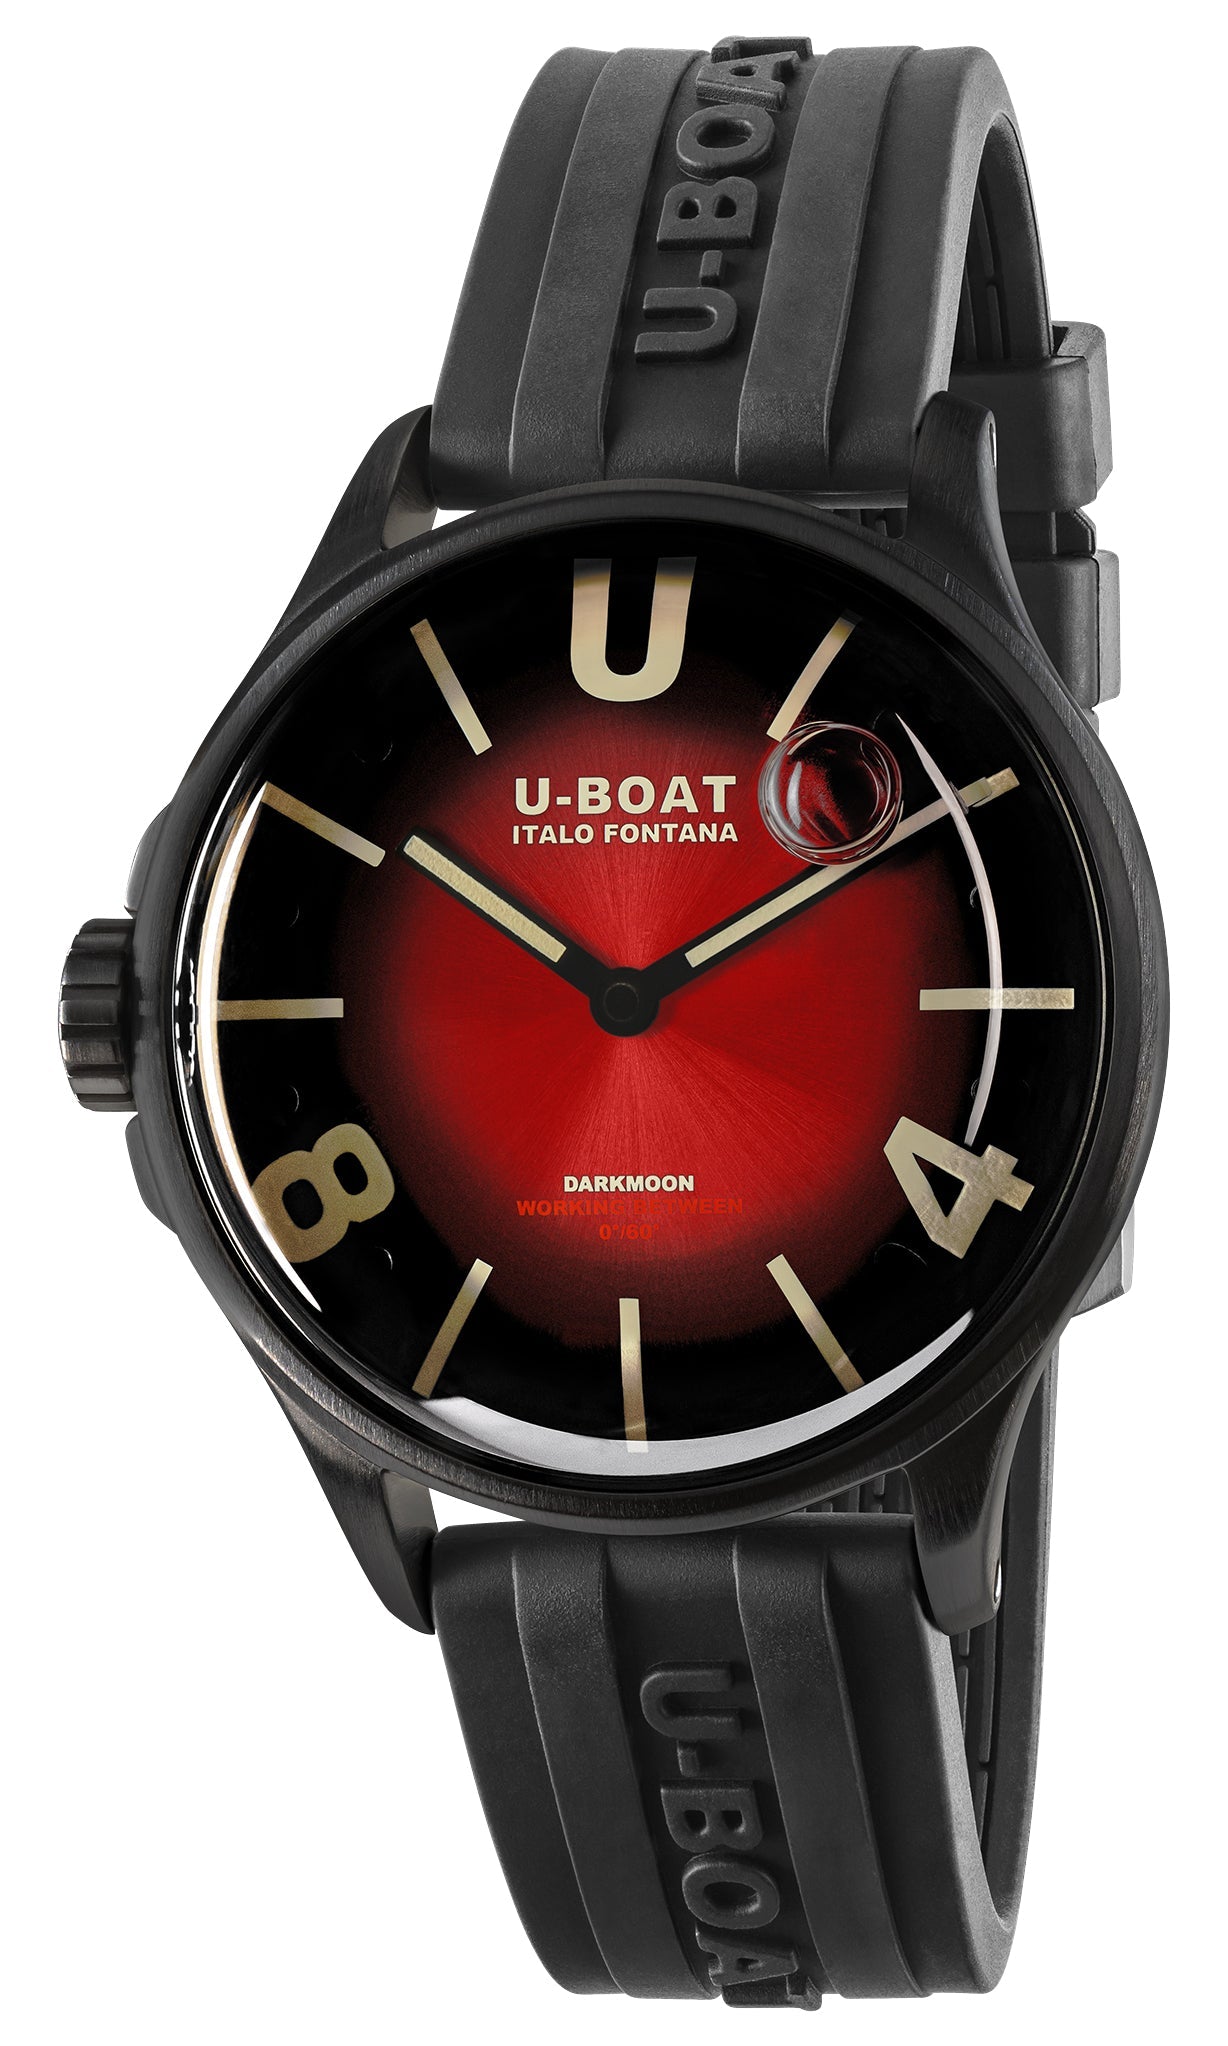 update alt-text with template Watches - Mens-U-Boat-9501-35 - 40 mm, 40 - 45 mm, black PVD case, Darkmoon, mens, menswatches, new arrivals, red, round, rpSKU_9018, rpSKU_9019, rpSKU_9502, rpSKU_9542, rpSKU_9549, rubber, swiss quartz, U-Boat, watches-Watches & Beyond